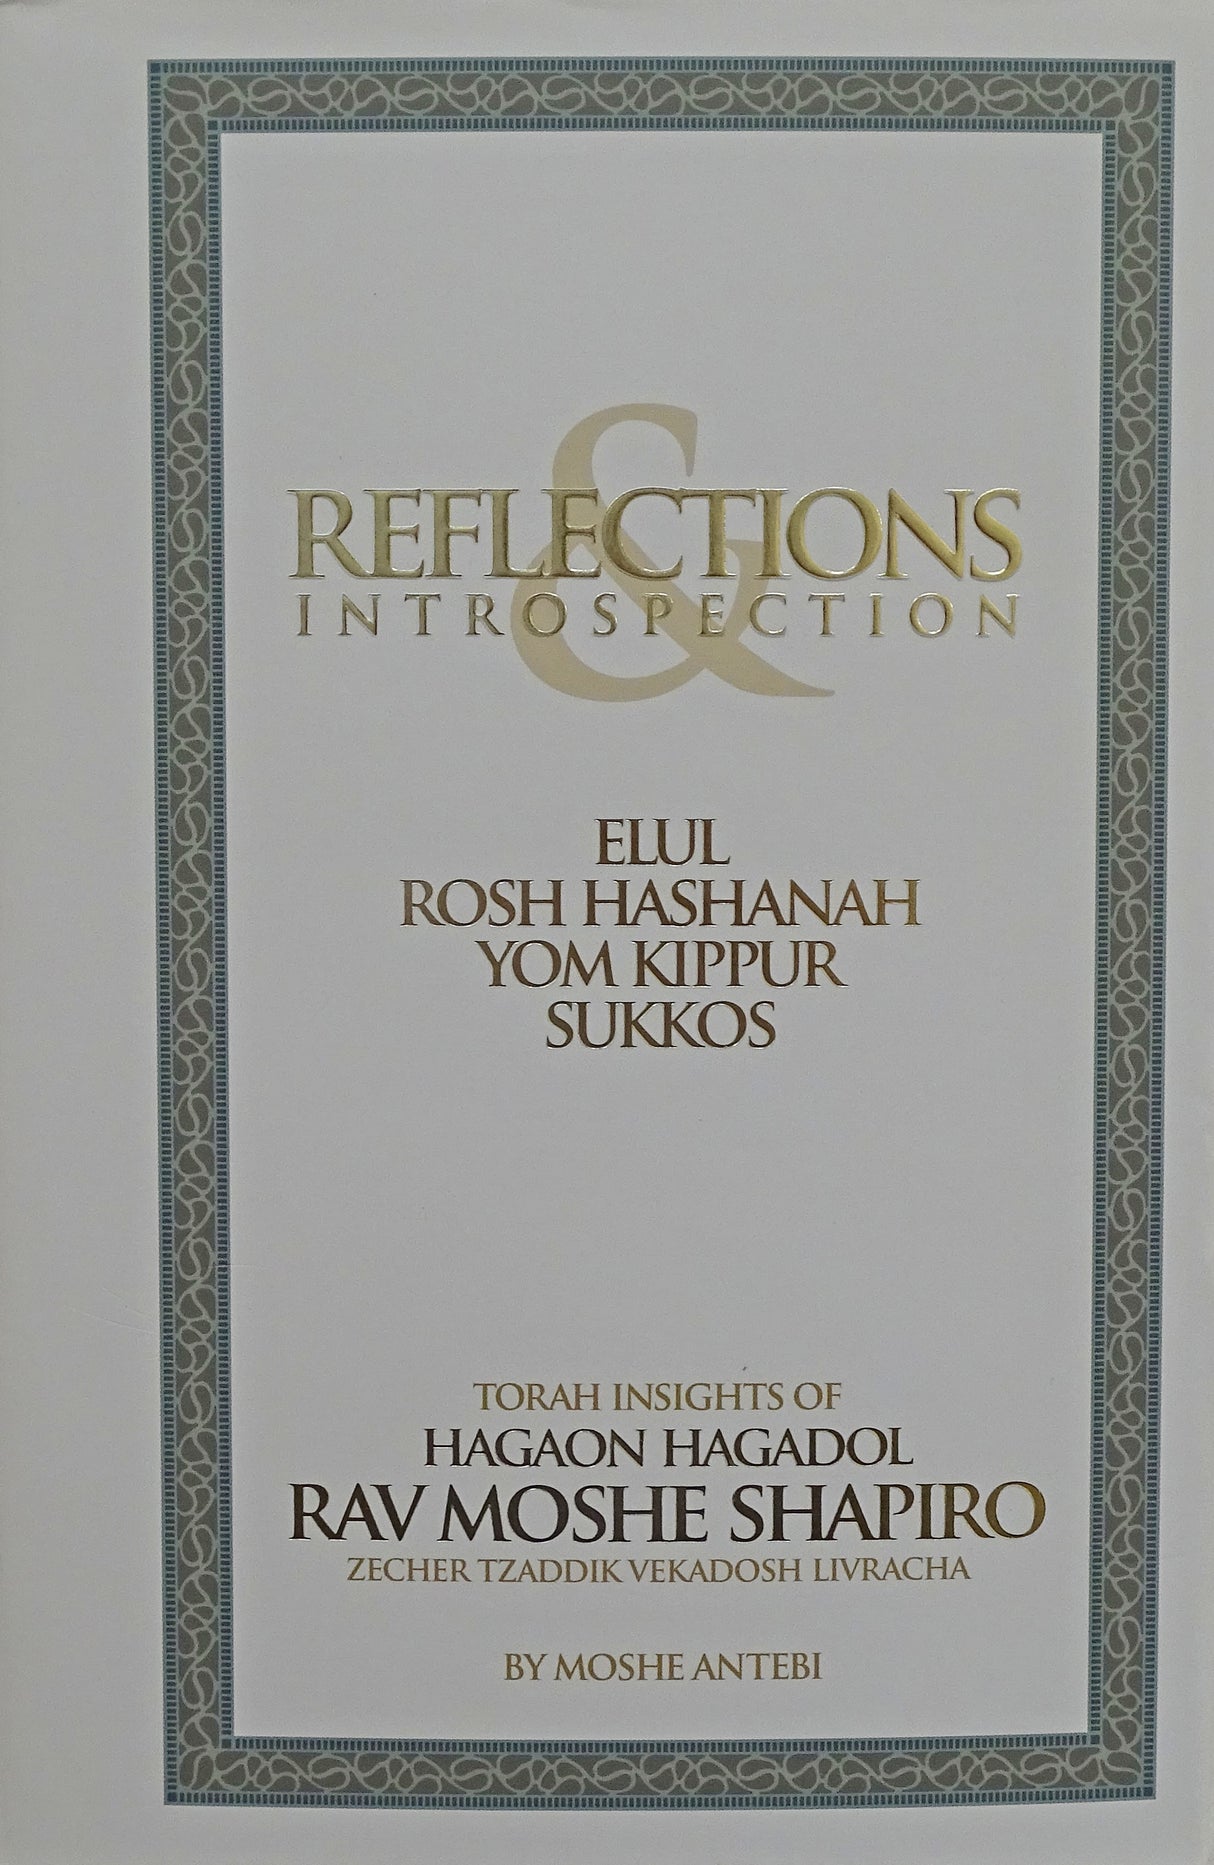 Reflections & Introspection Ellul Rosh Hashanah Yom Kippur Sukkos